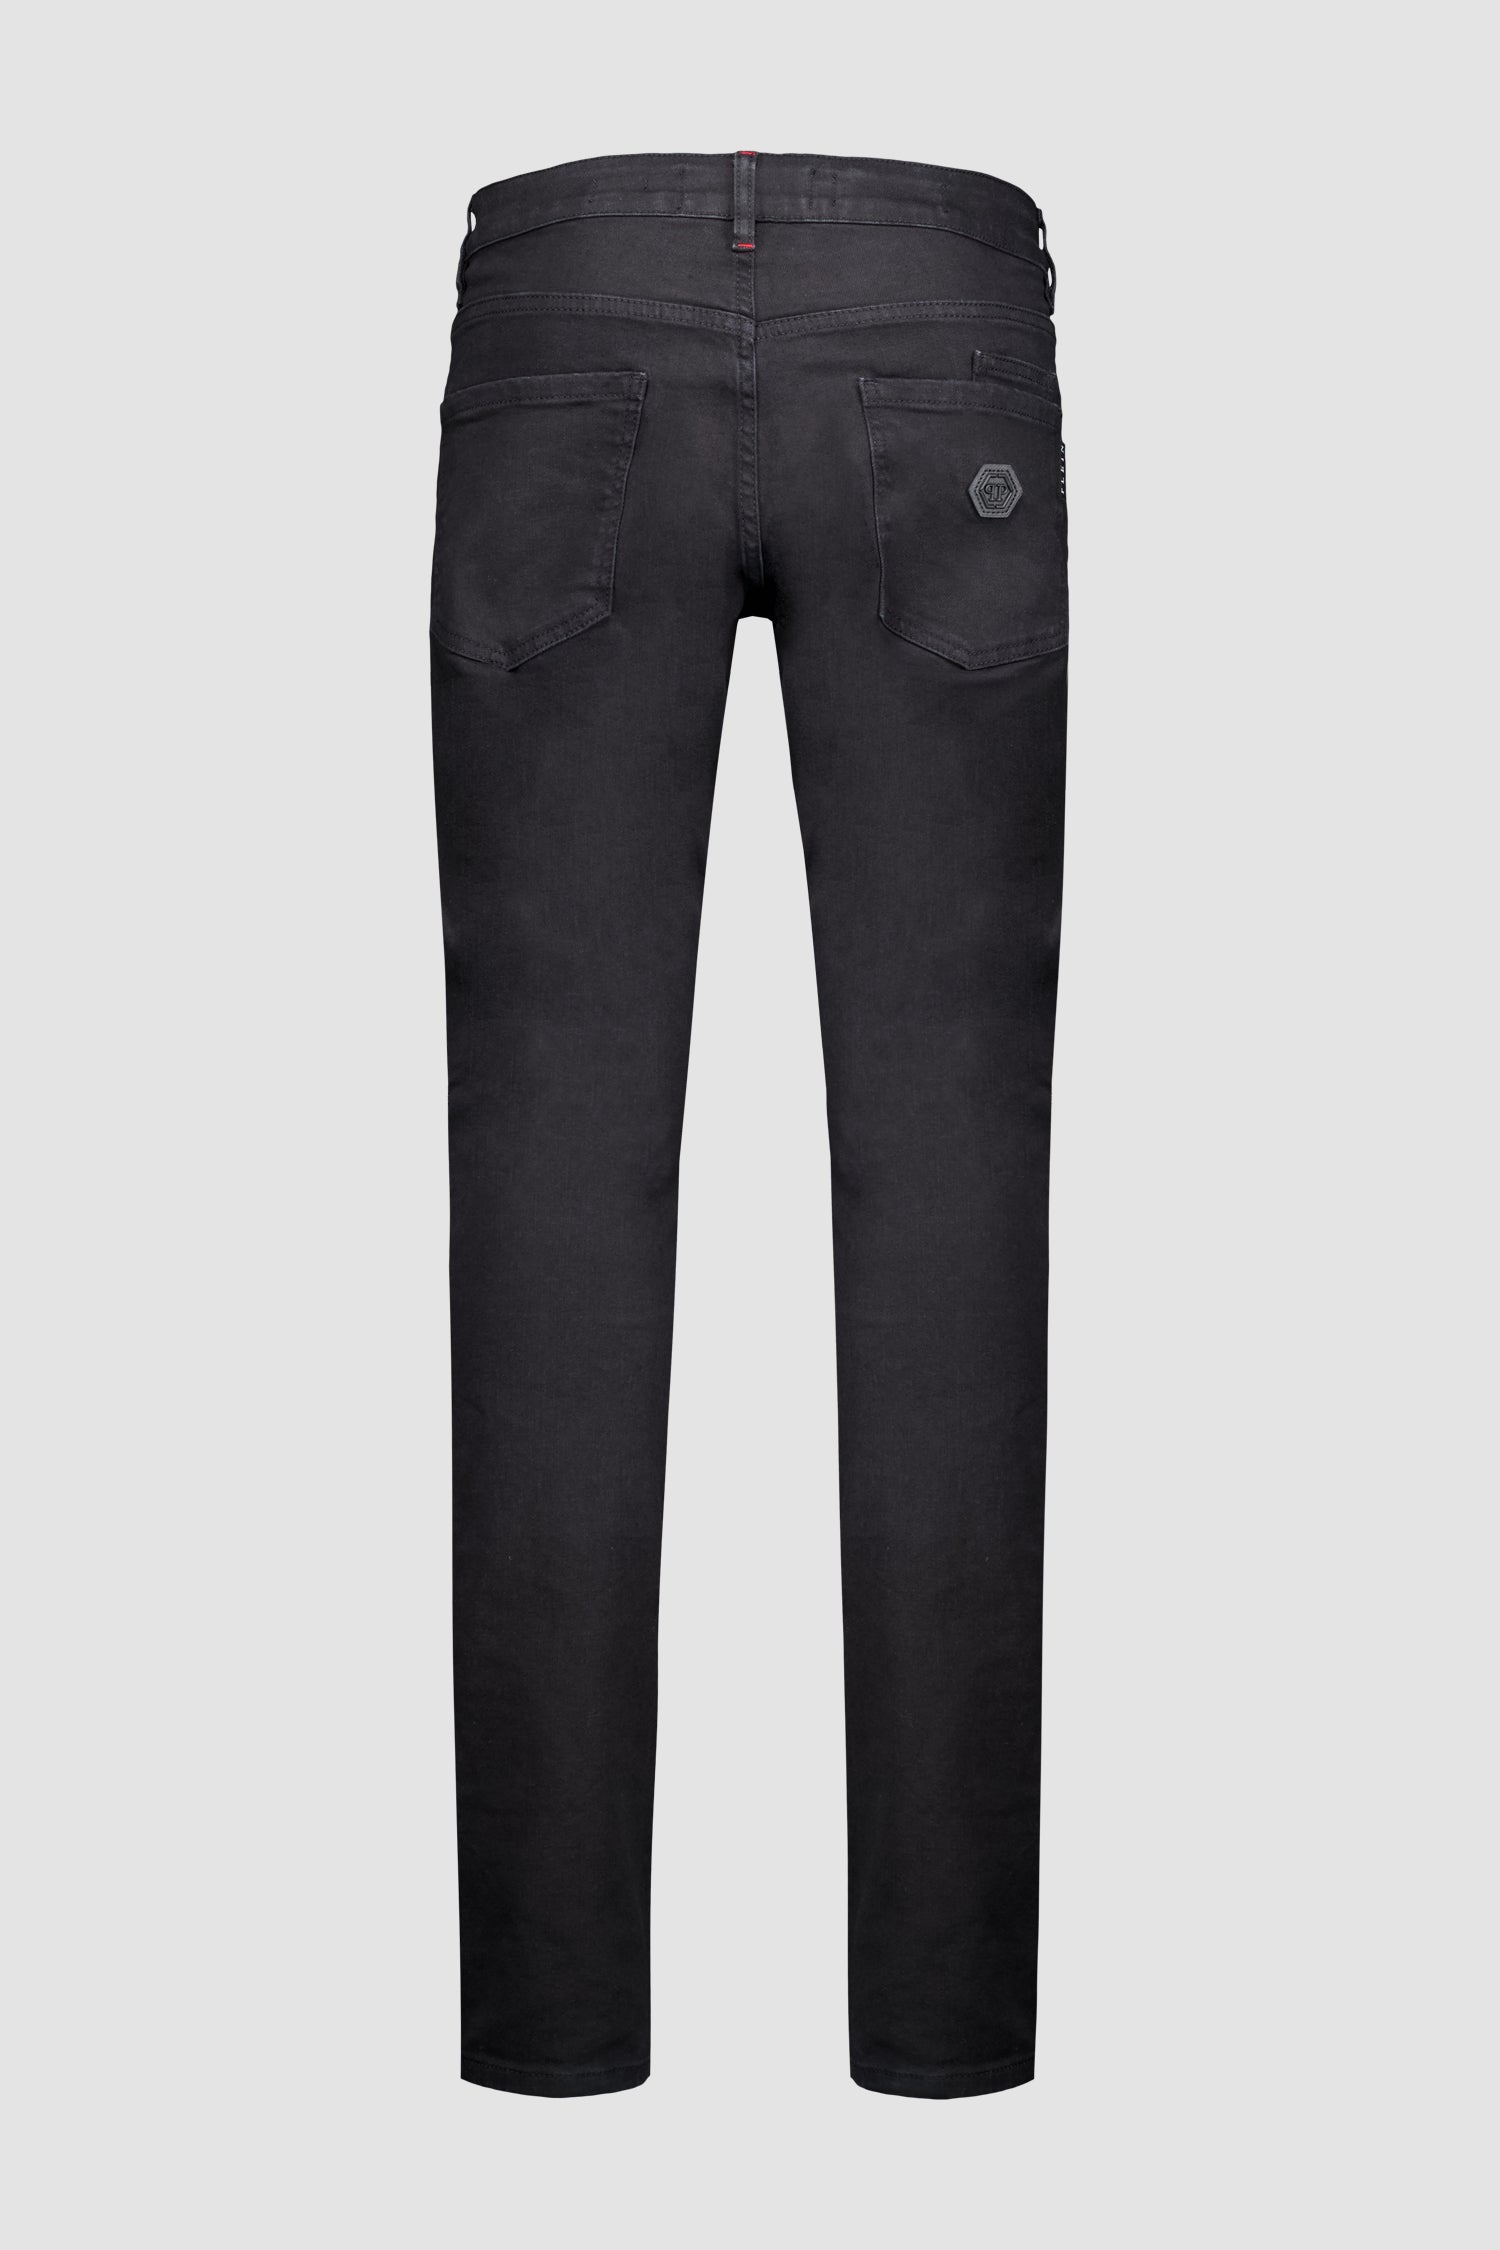 Philipp Plein Black Denim Super Straight Cut Trousers